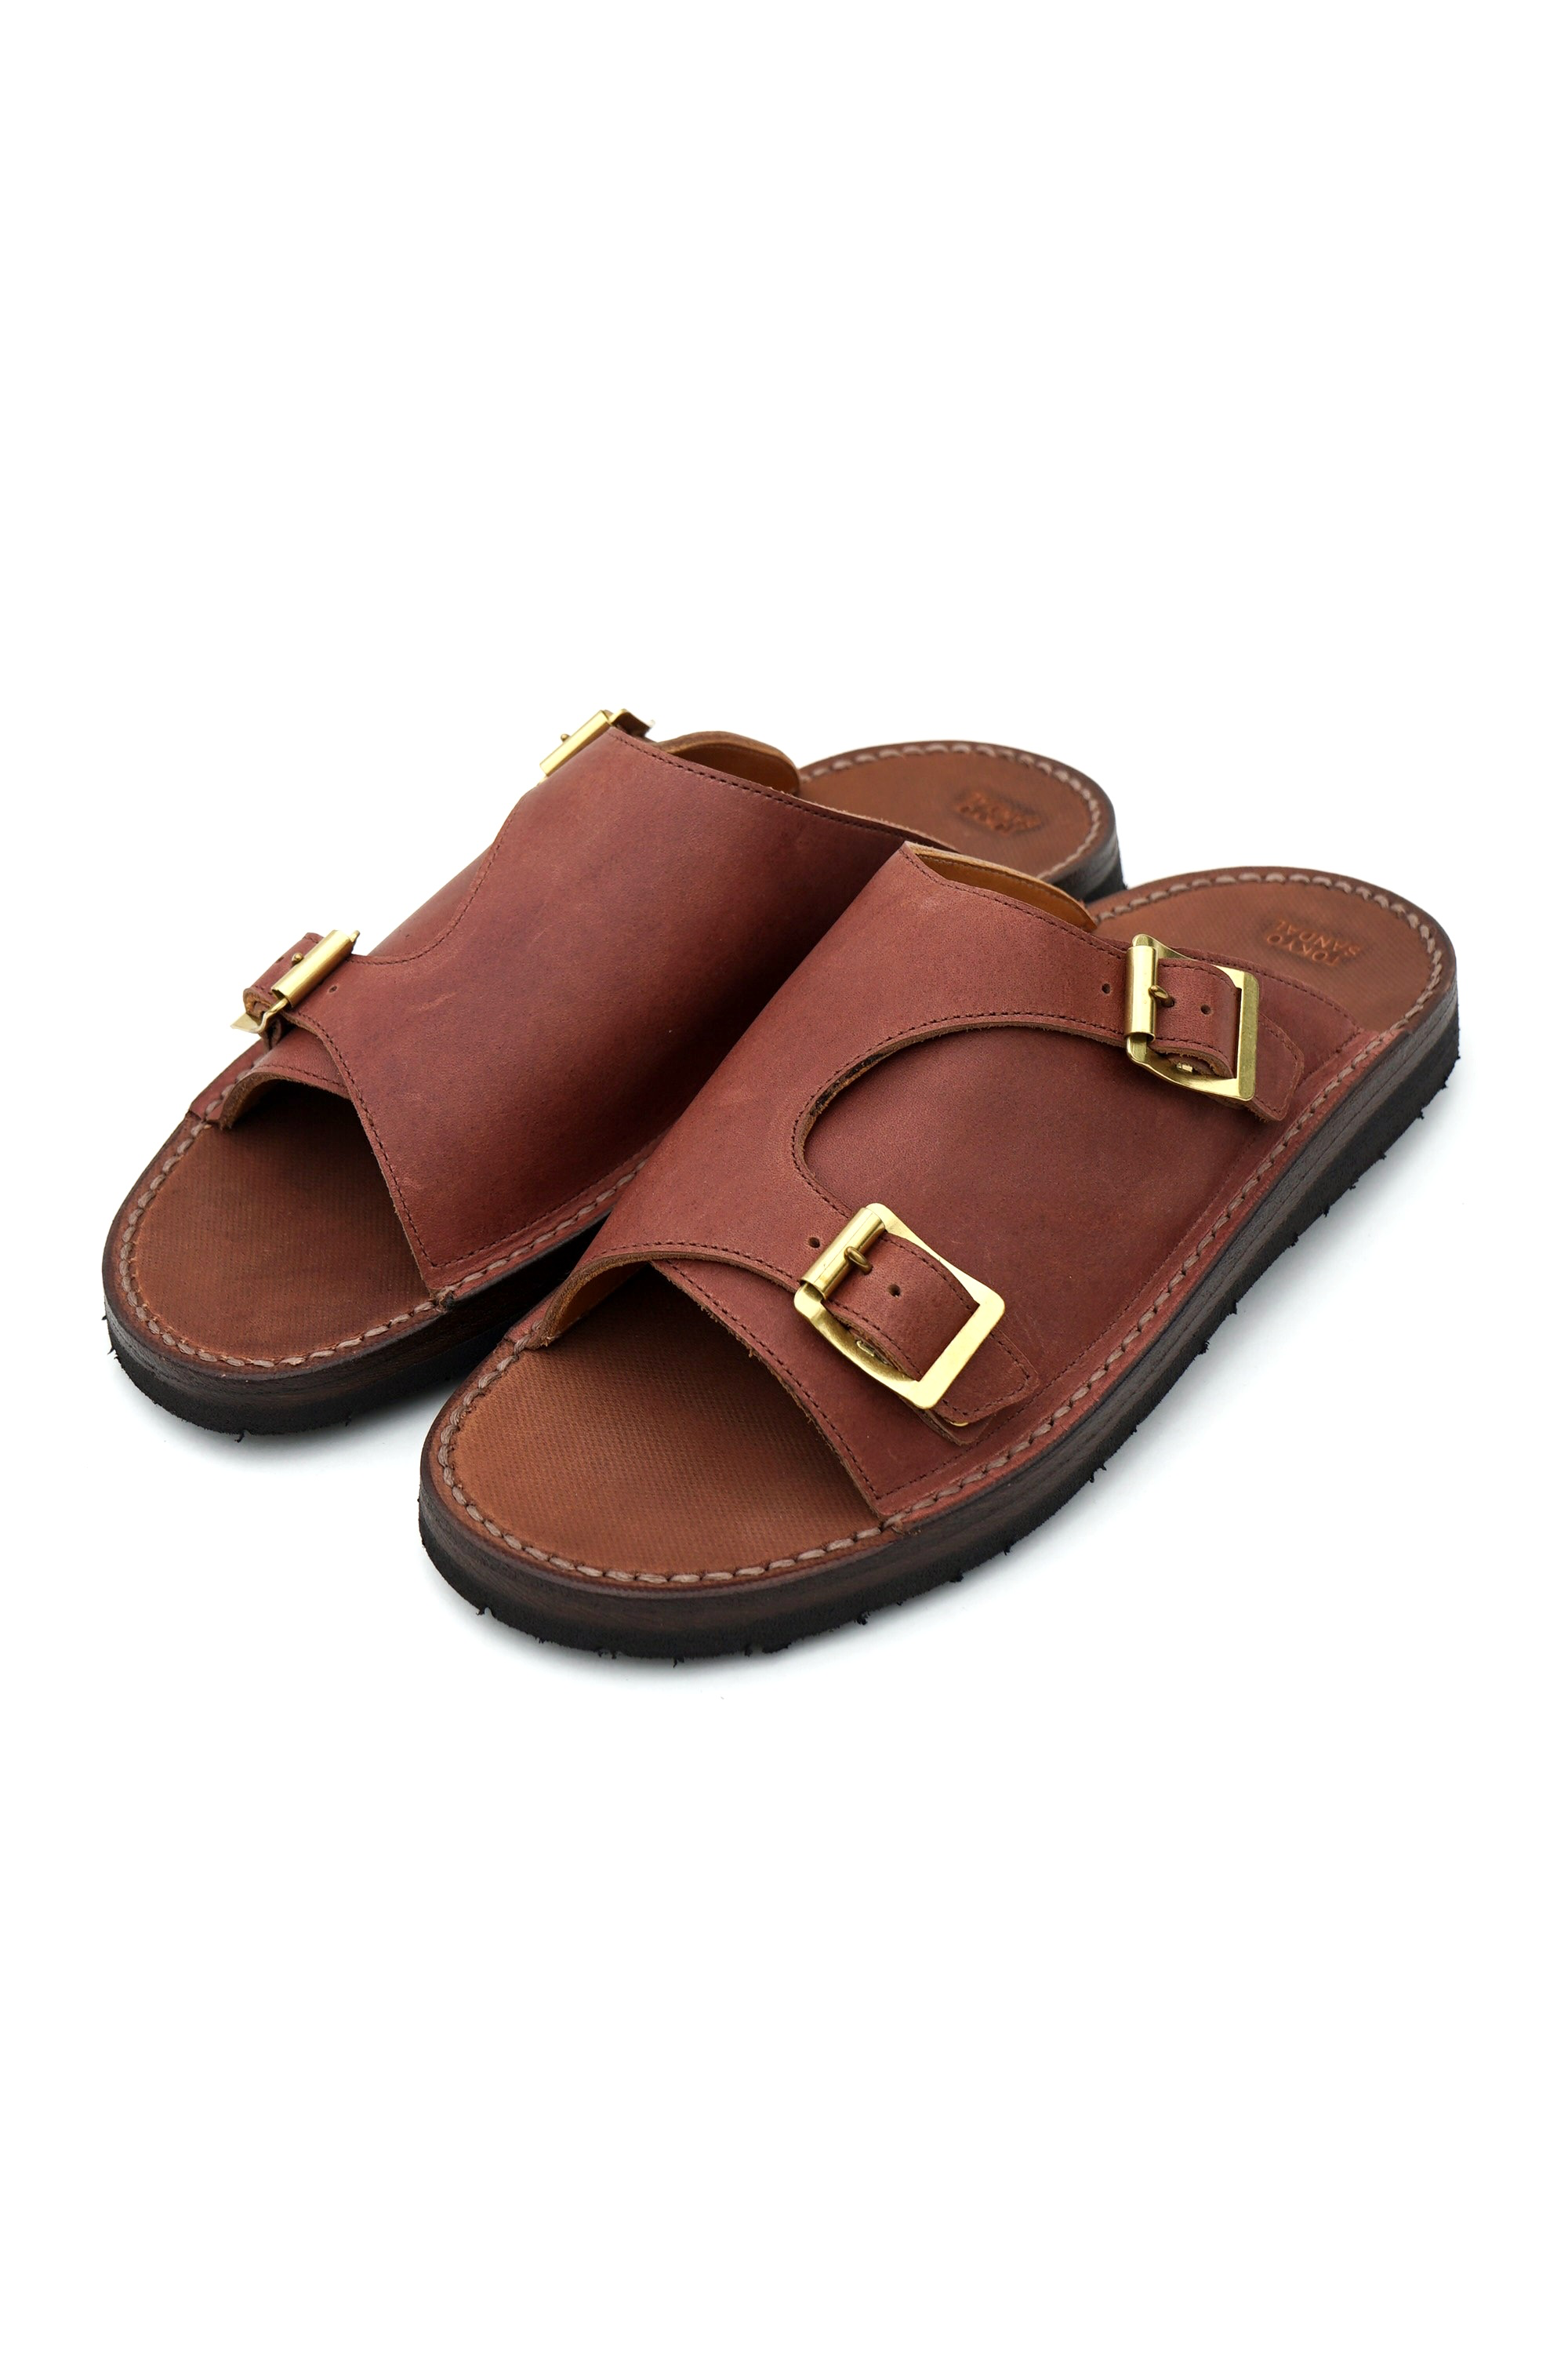 Tokyo Sandals(トーキョーサンダル) “DOUBLE MONK SANDAL” #TS-C02